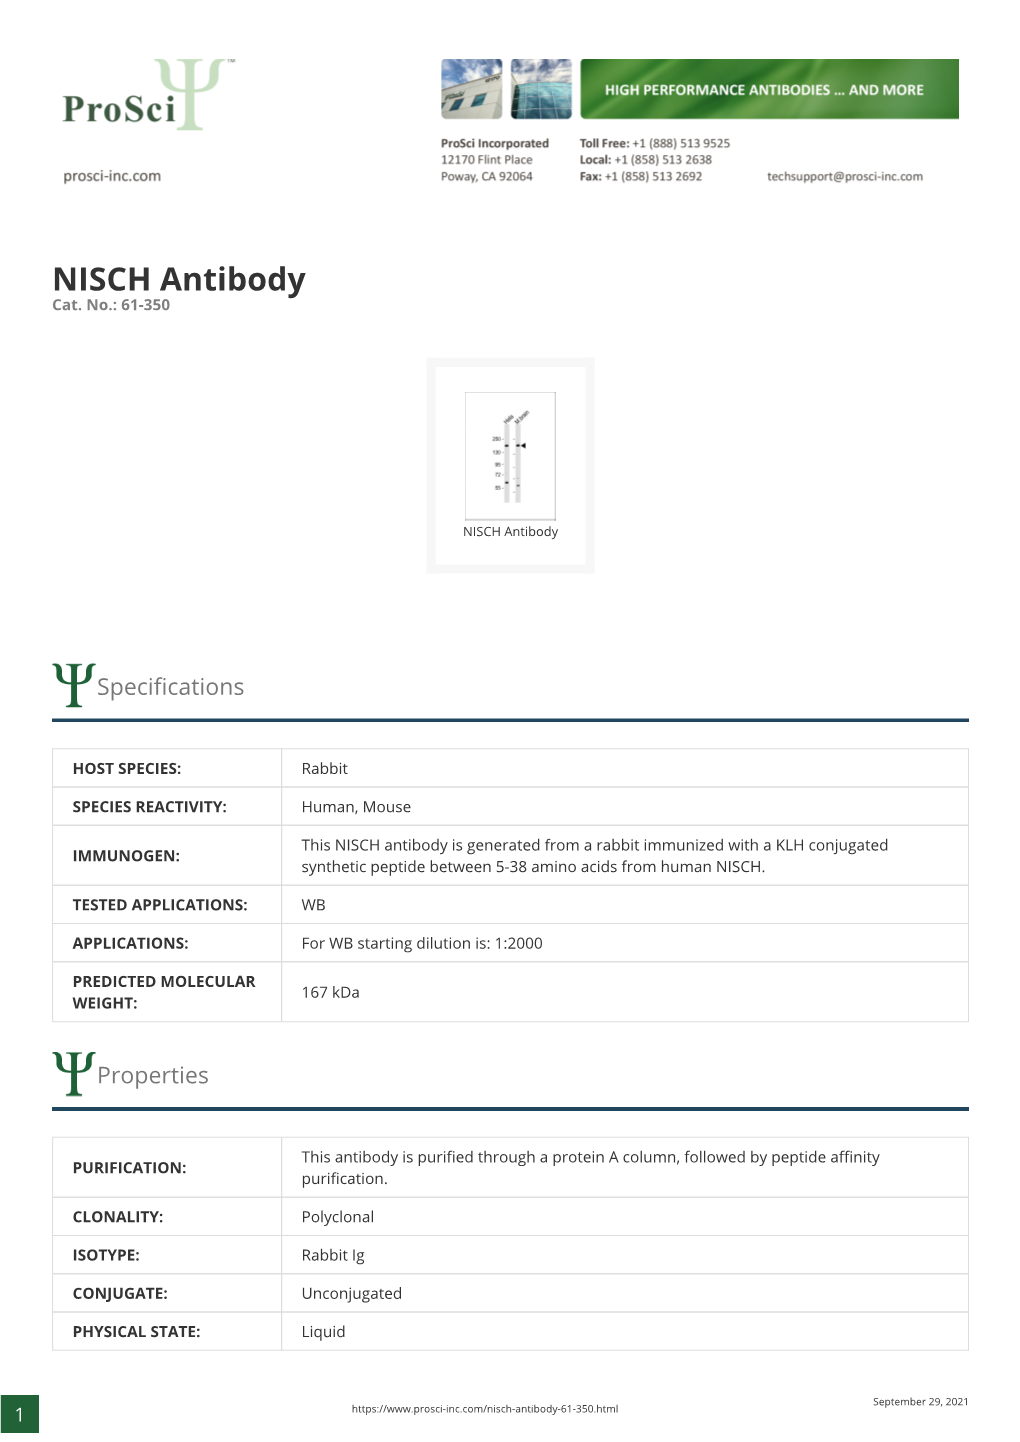 NISCH Antibody Cat